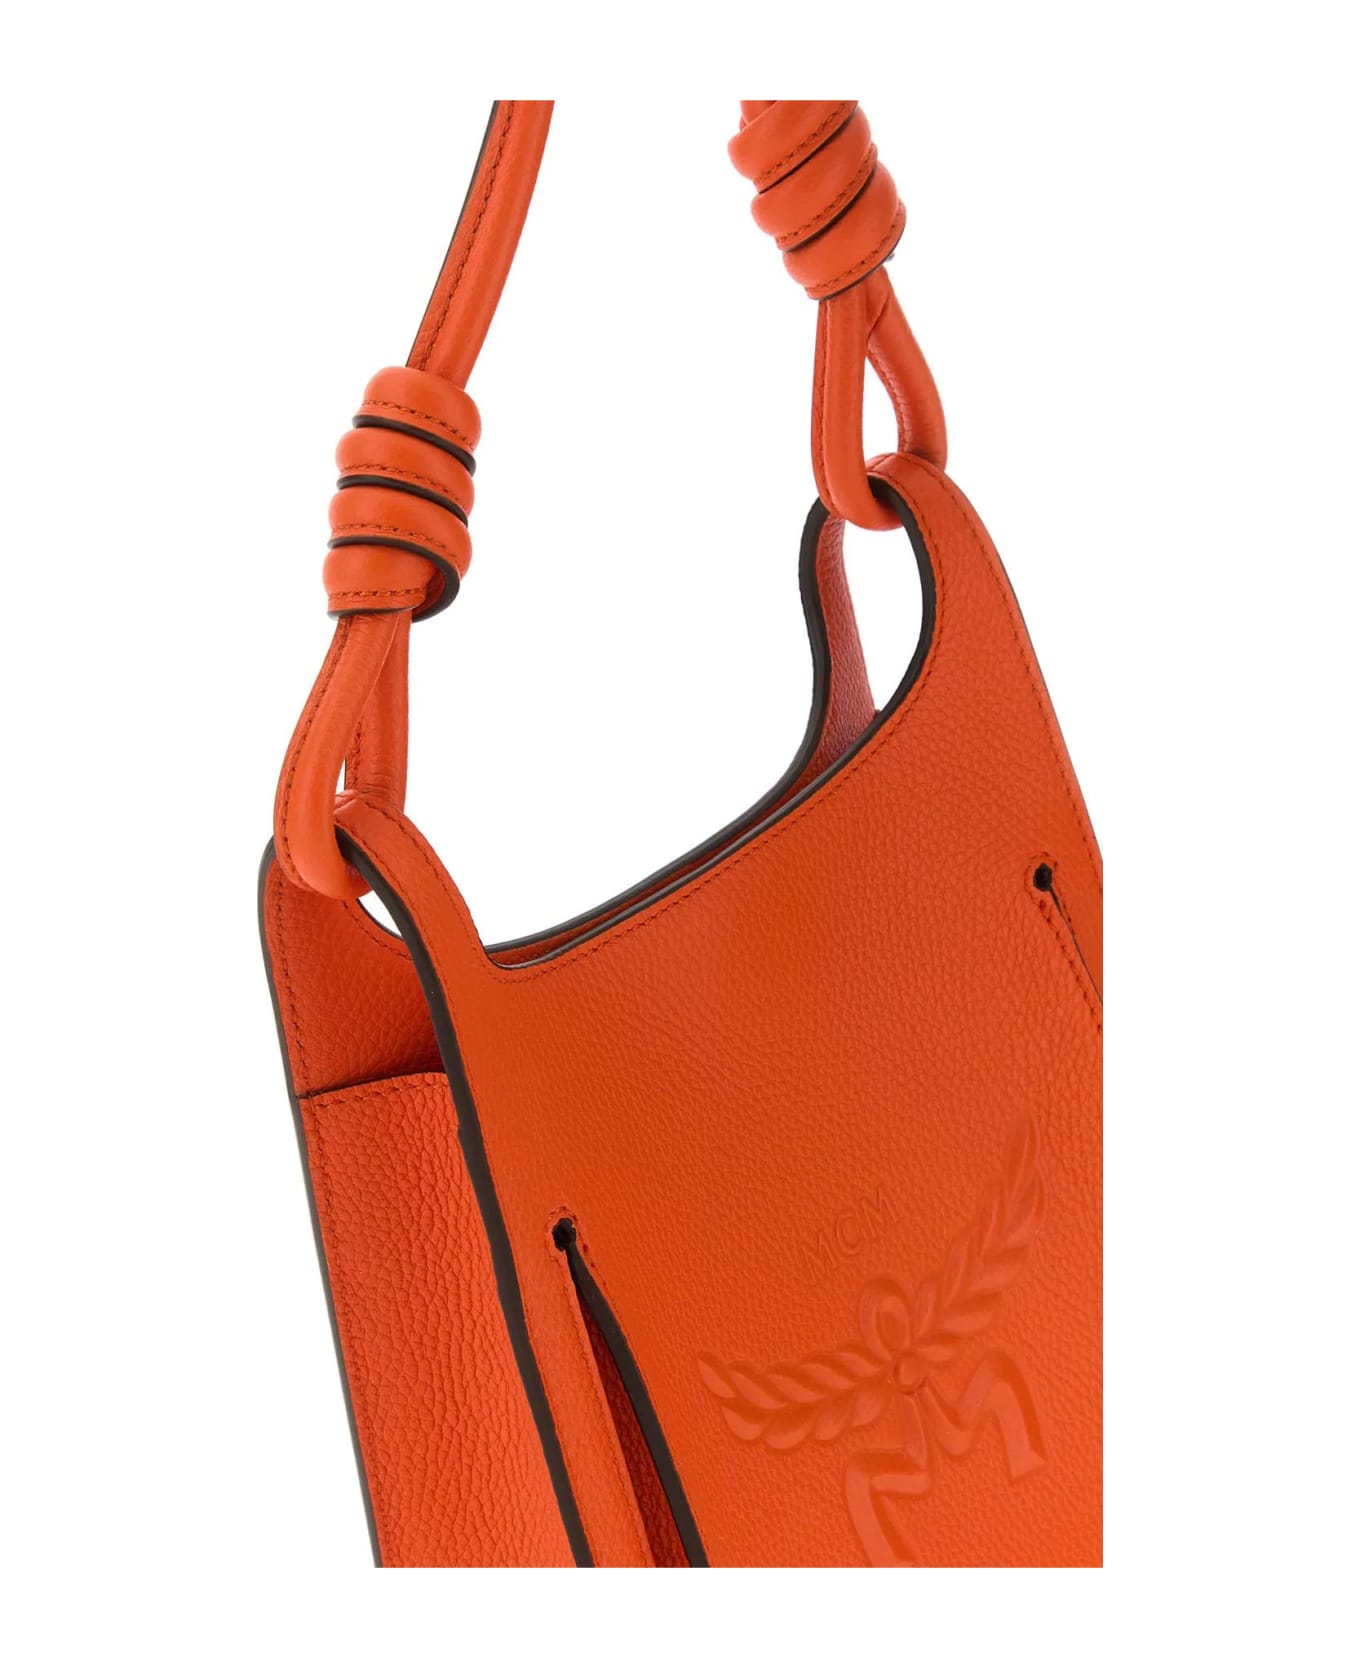 MCM Dark Orange Leather Mini Himmel Hobo Crossbody Bag - ORANGE